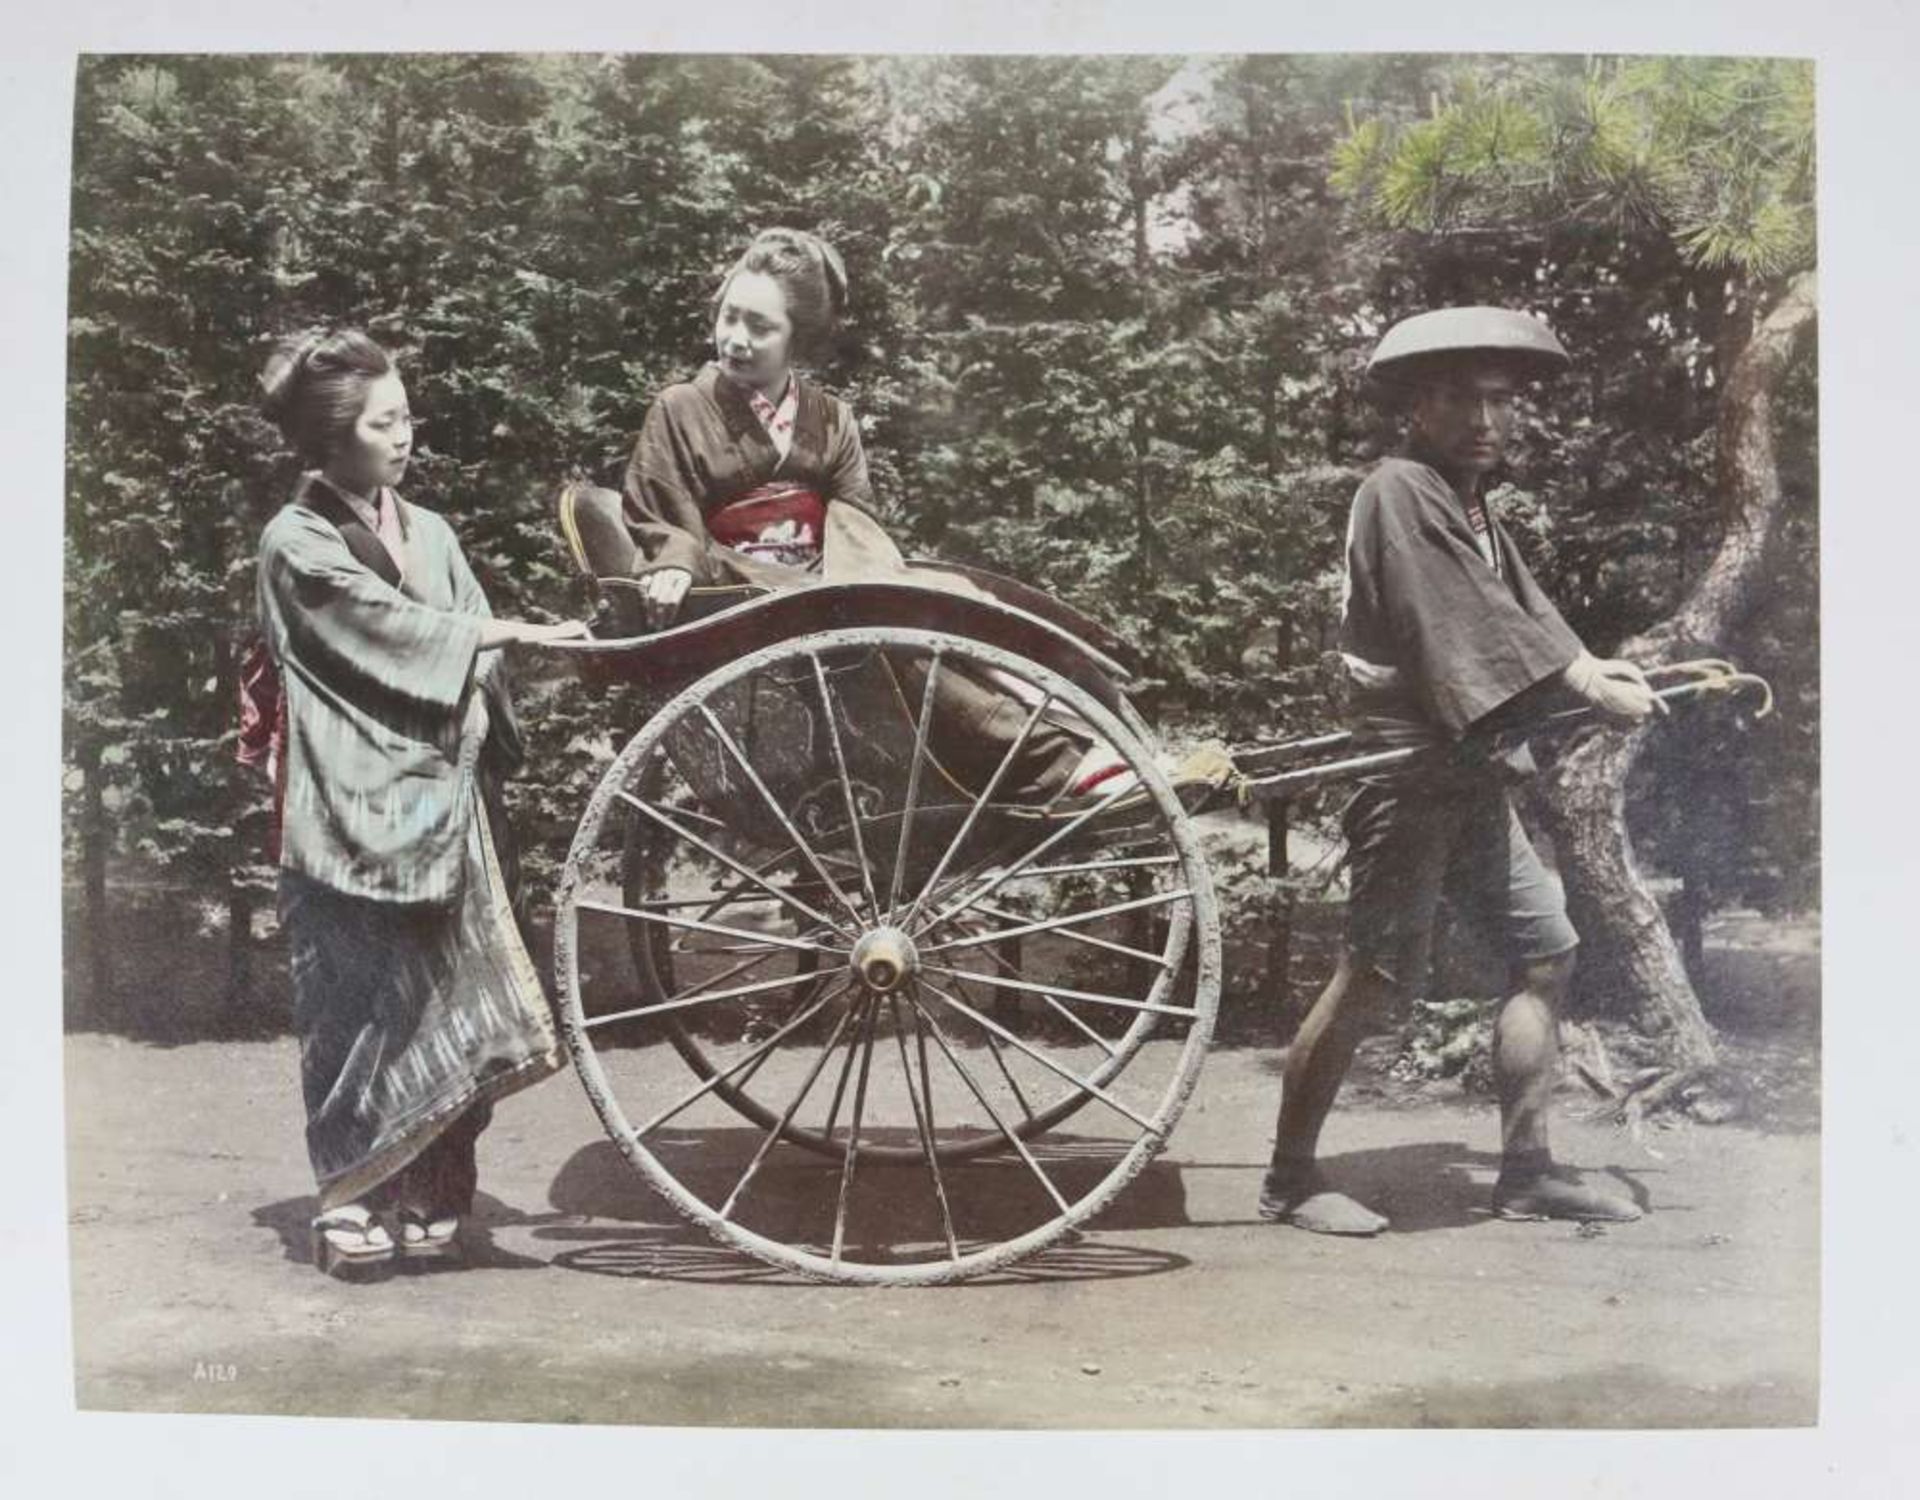 Japan, hervorragendes Fotoalbum, Japan um 1900, 50 handkolorierte Albumin-Abzüge. - Image 6 of 9